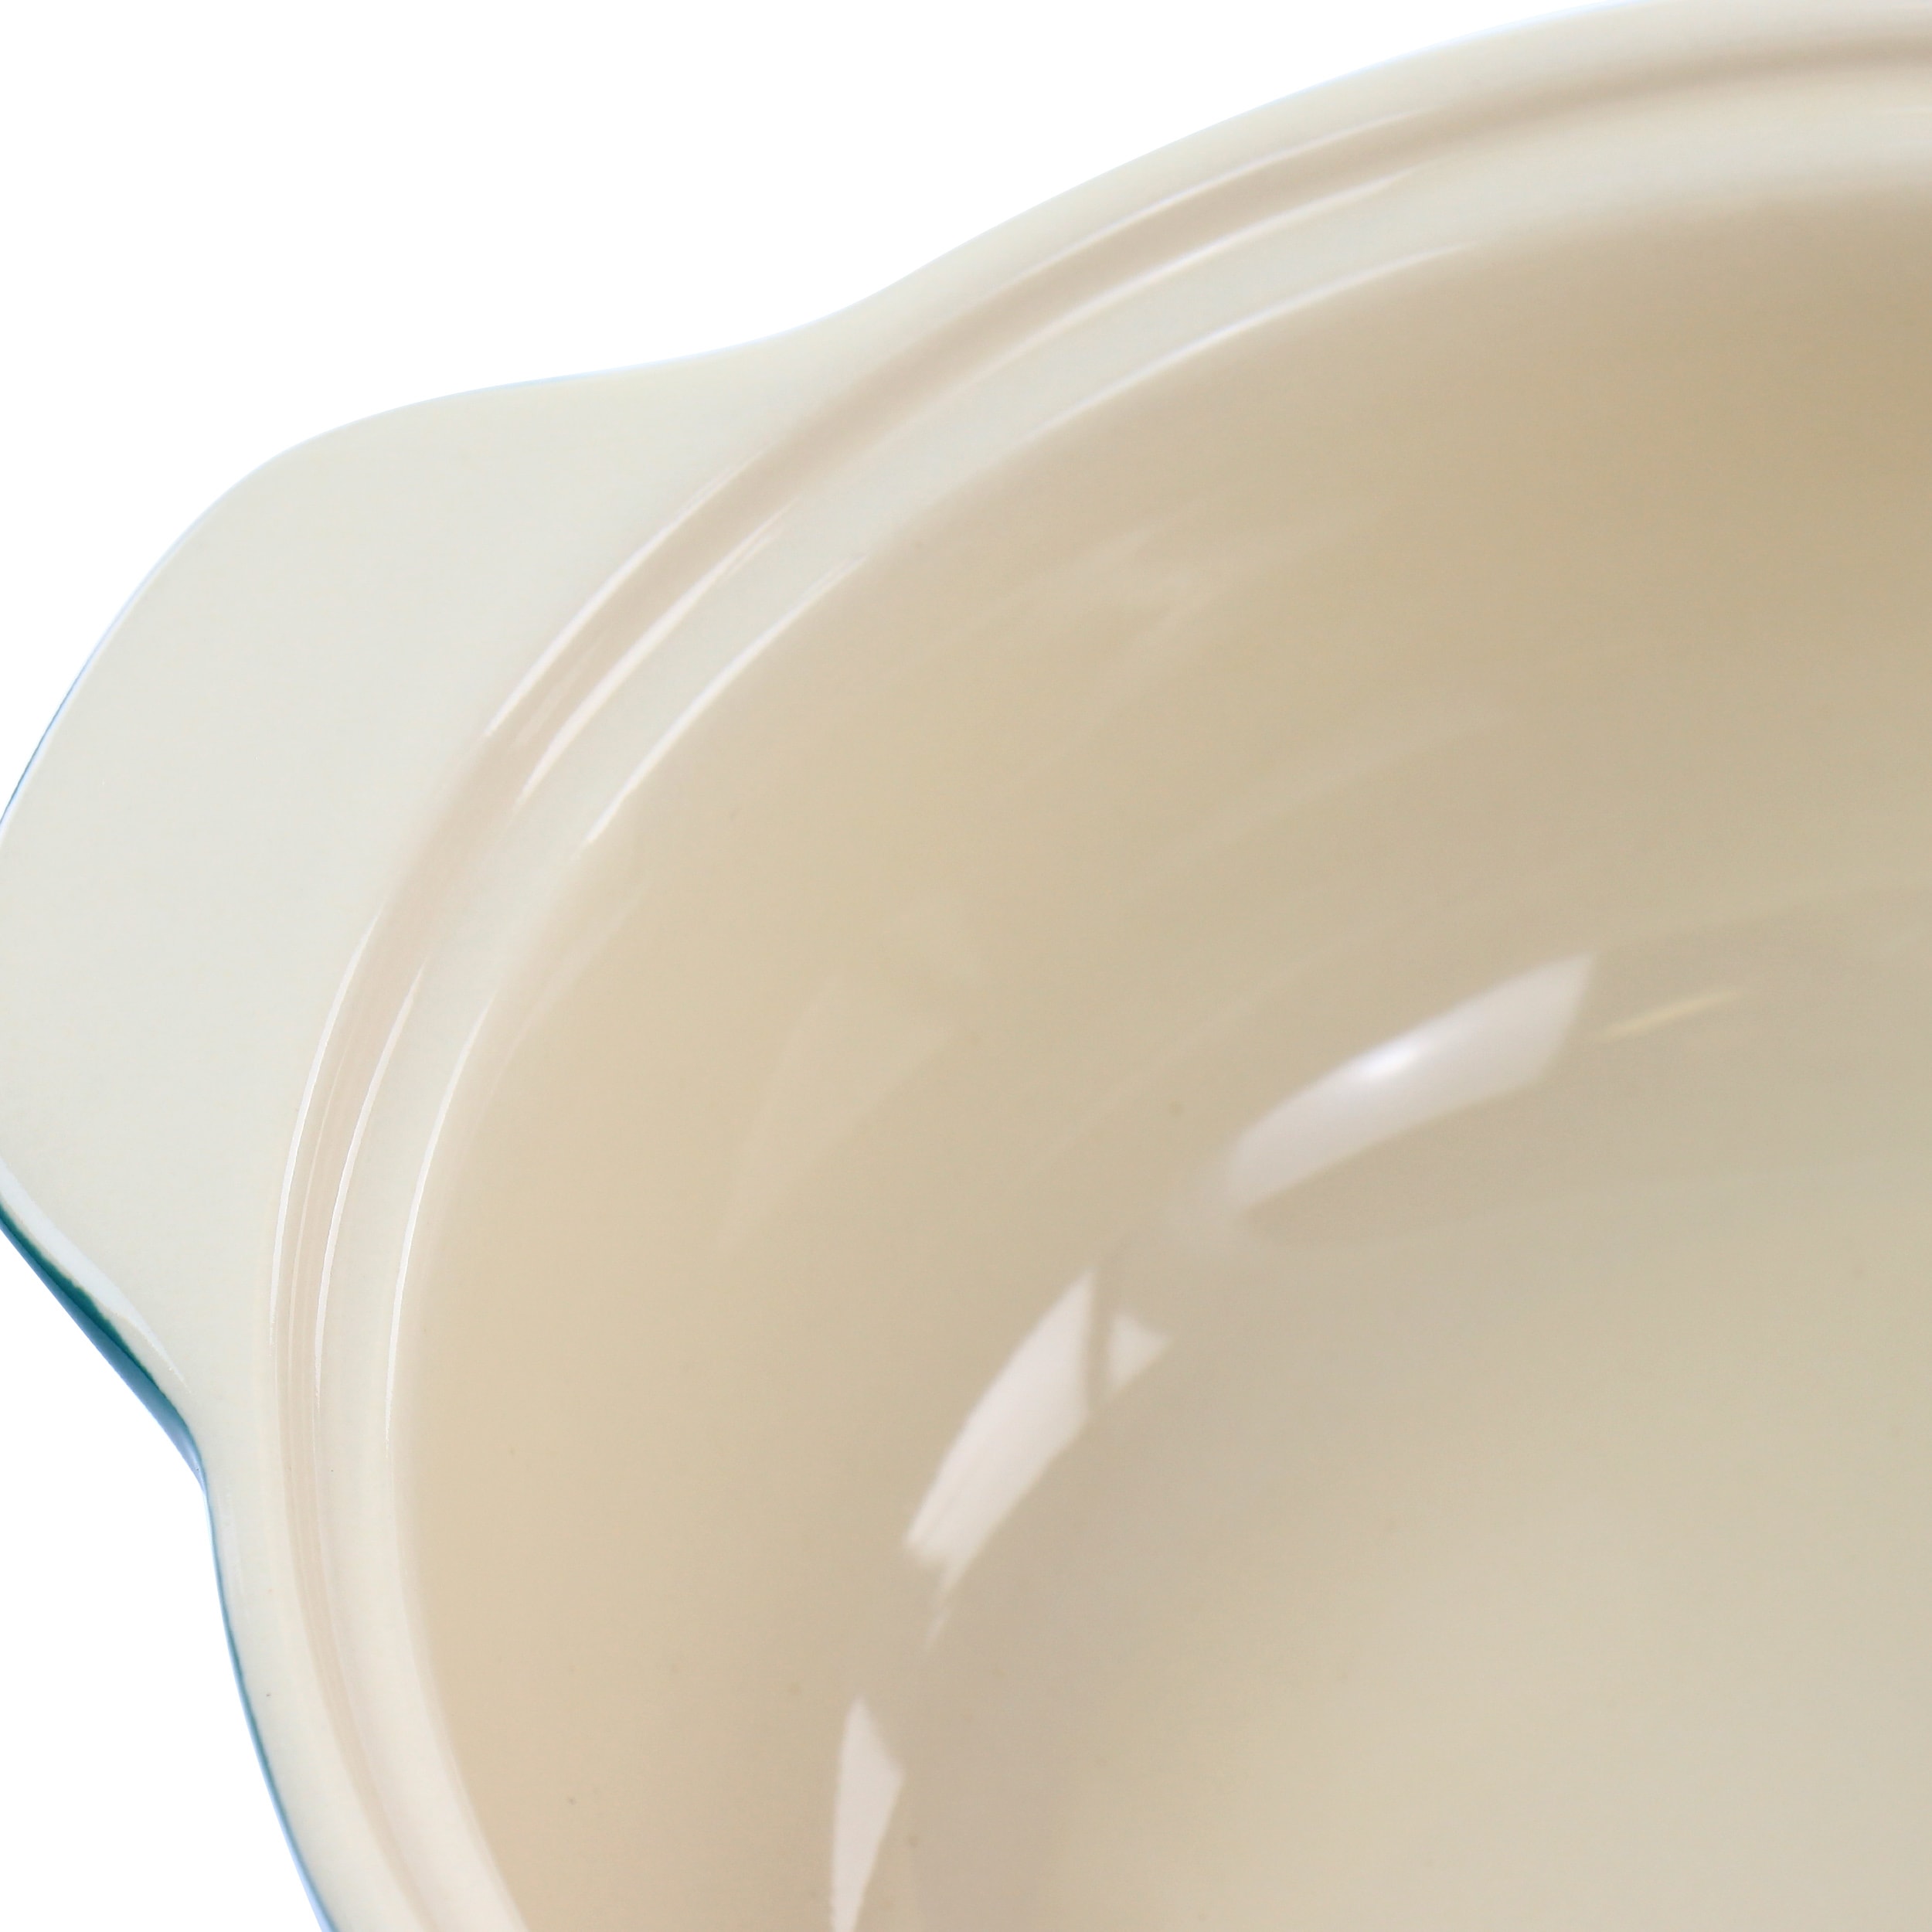 Crock Pot Artisan 2.5 Quart Oval Stoneware Casserole in White